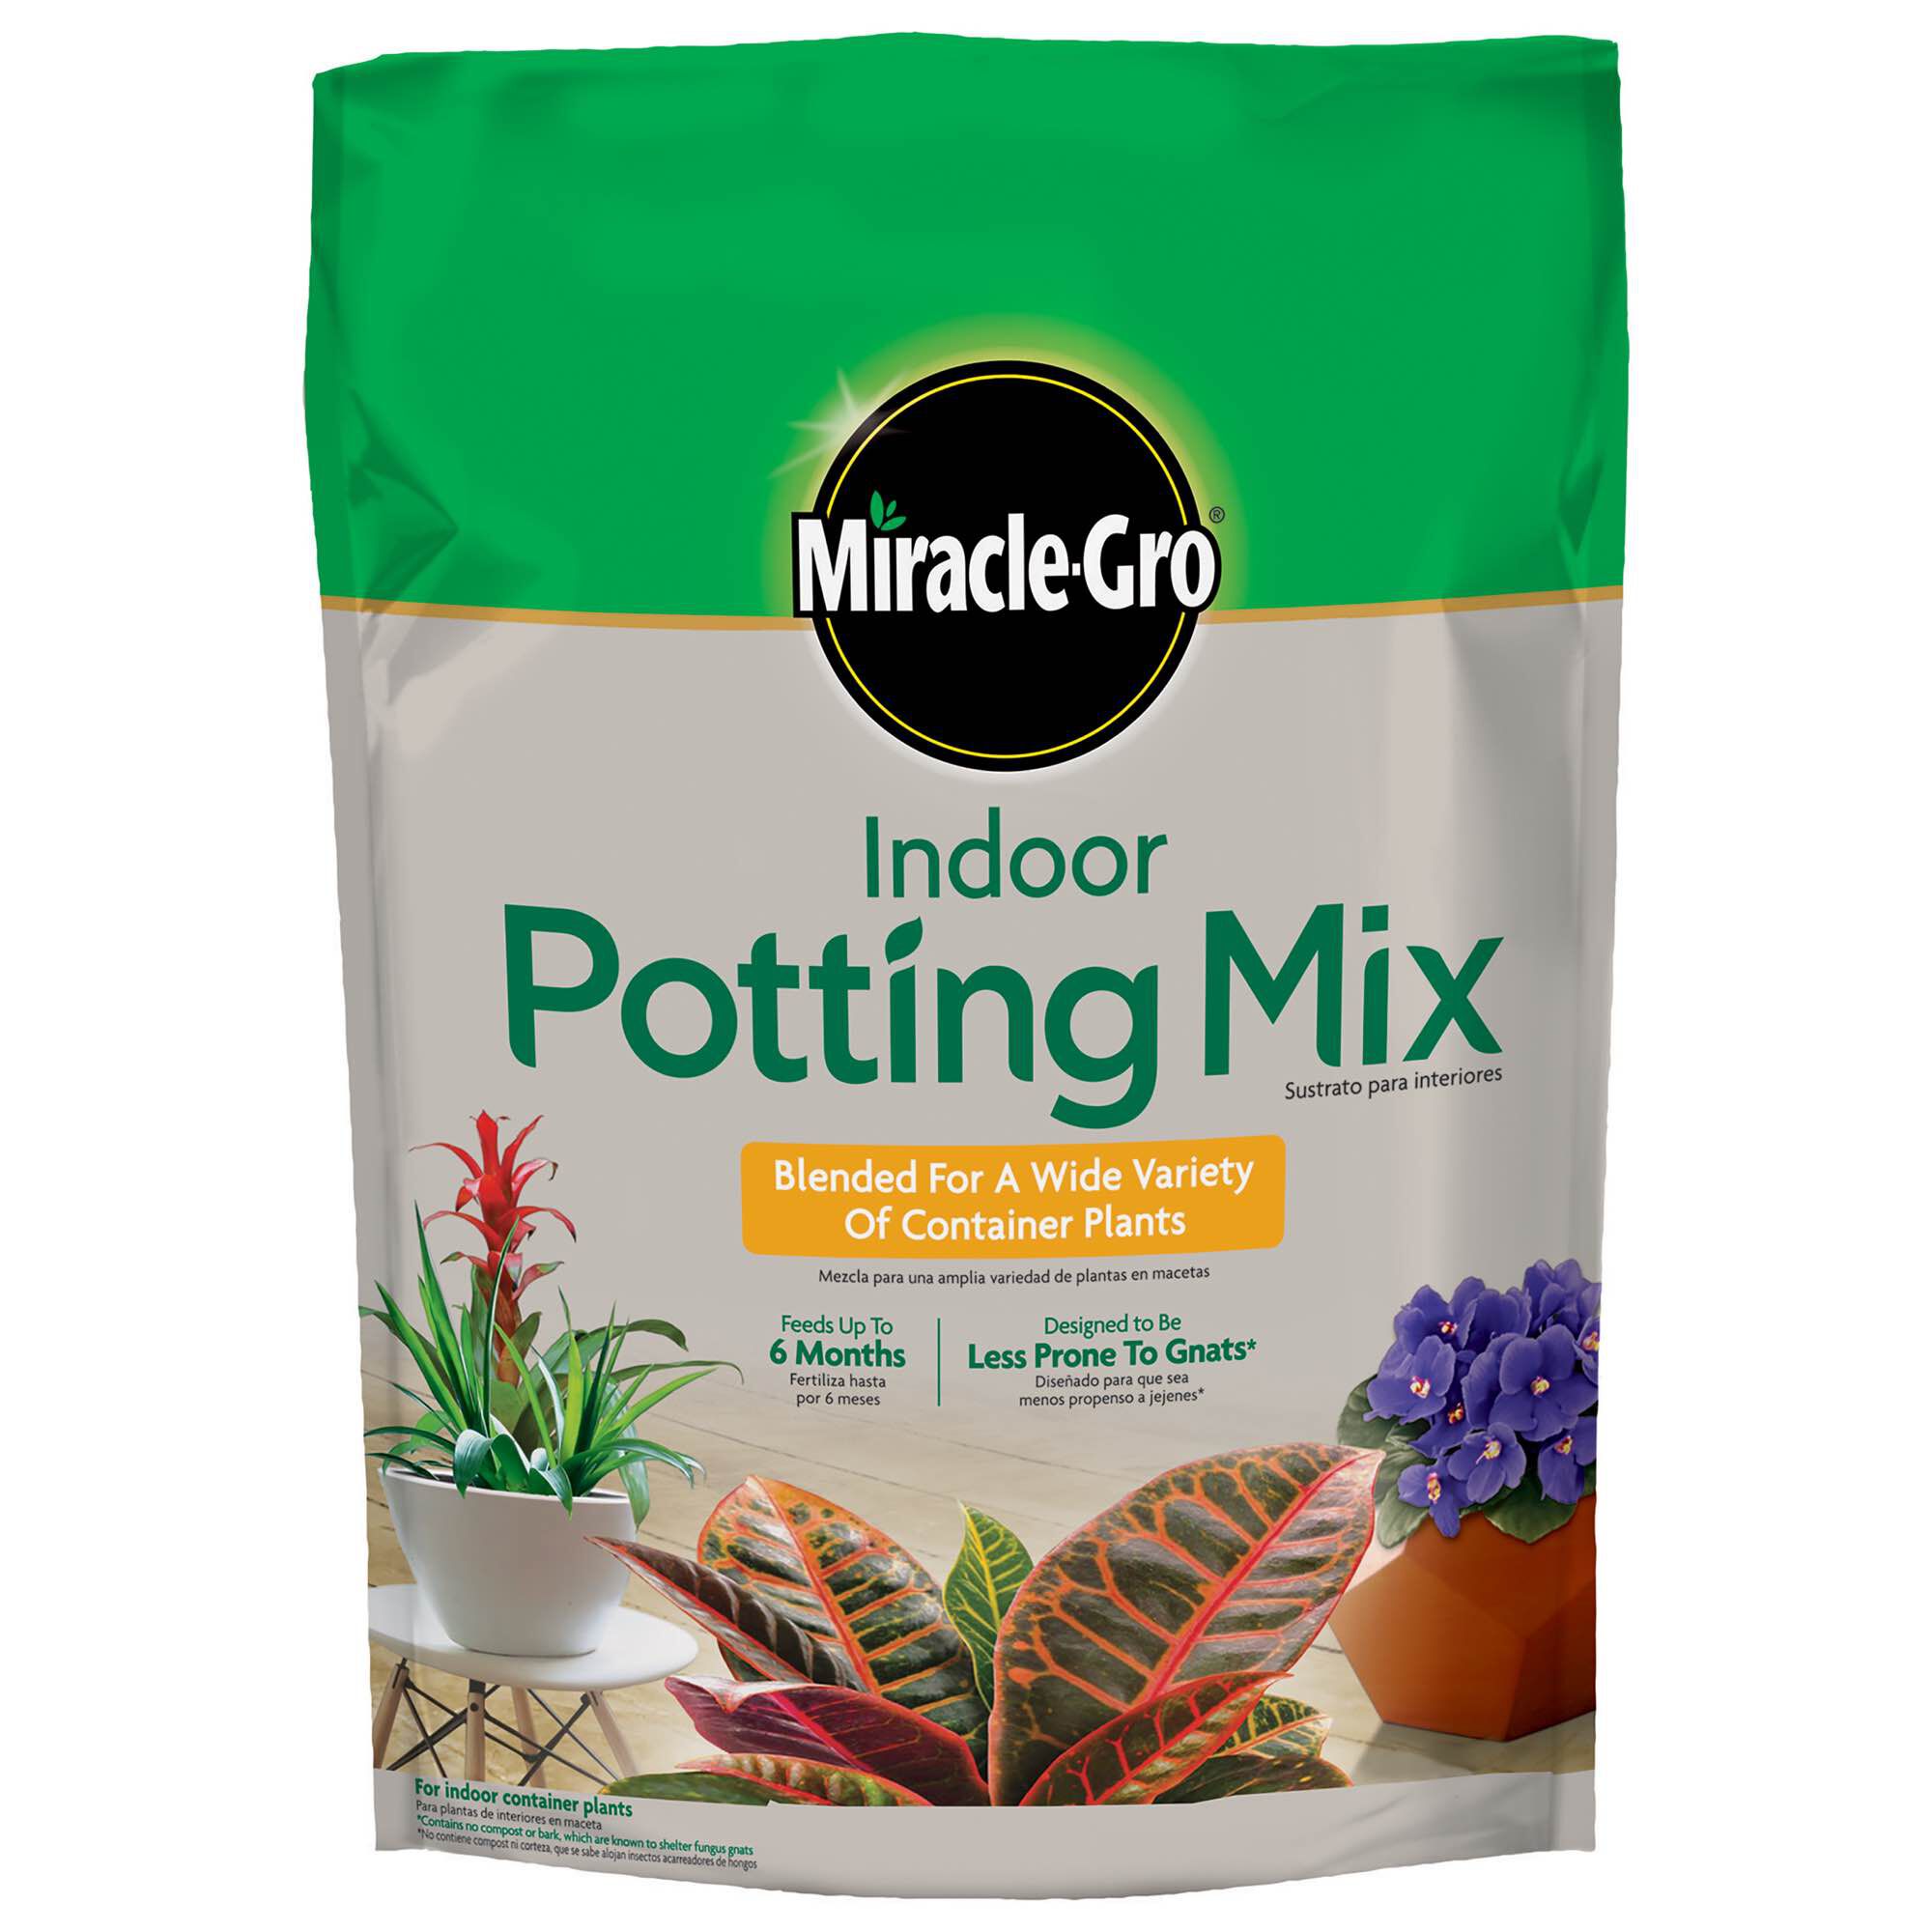 Revitalising & Re-using Old Potting Mix - The Micro Gardener